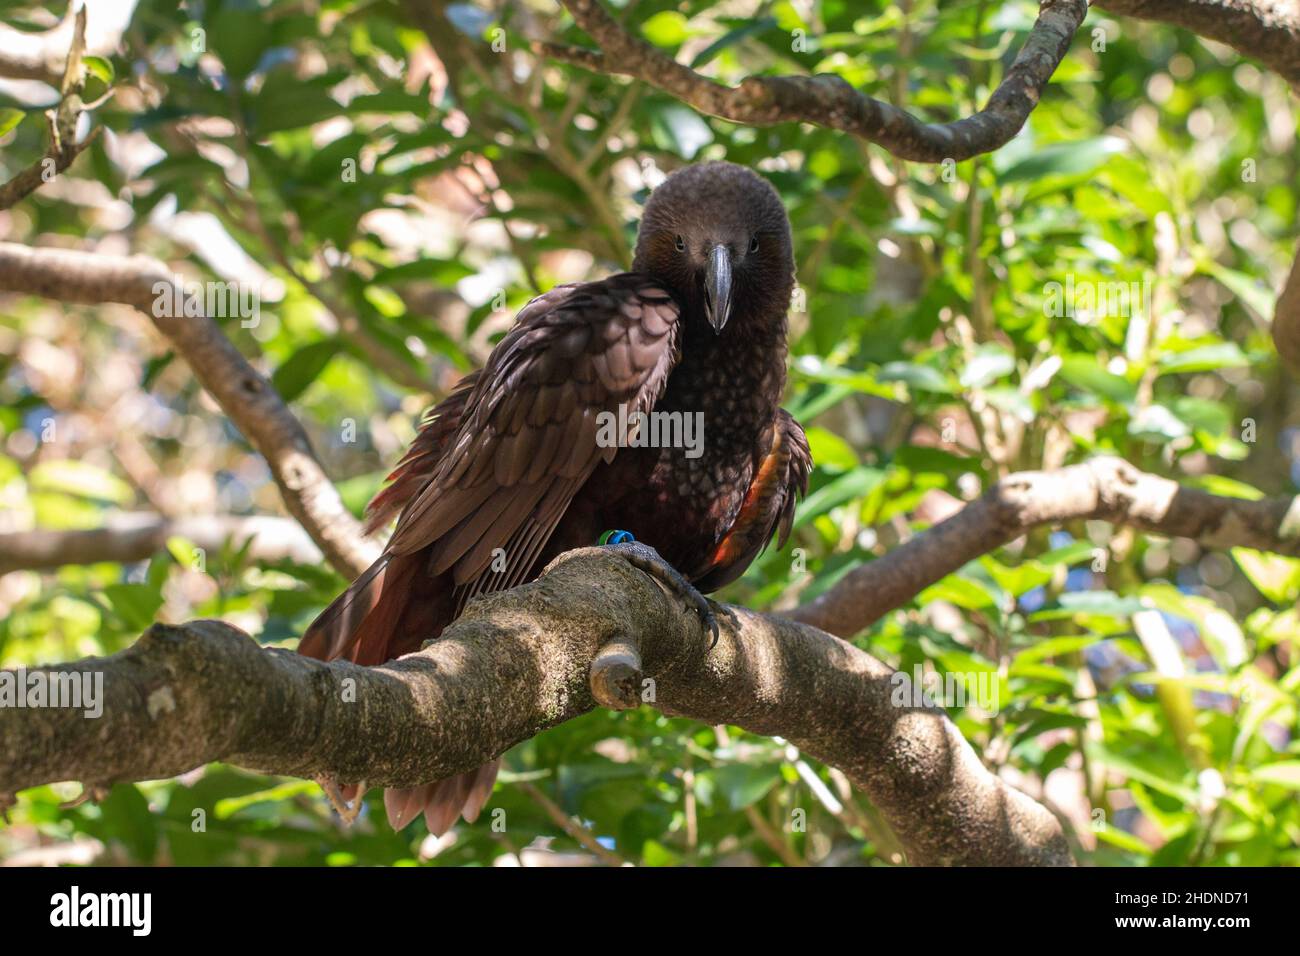 Kaka (Nestor meridionalis), a native New Zealand parrot, in a tree looking at the camera from the shadows, looking menacing Stock Photo